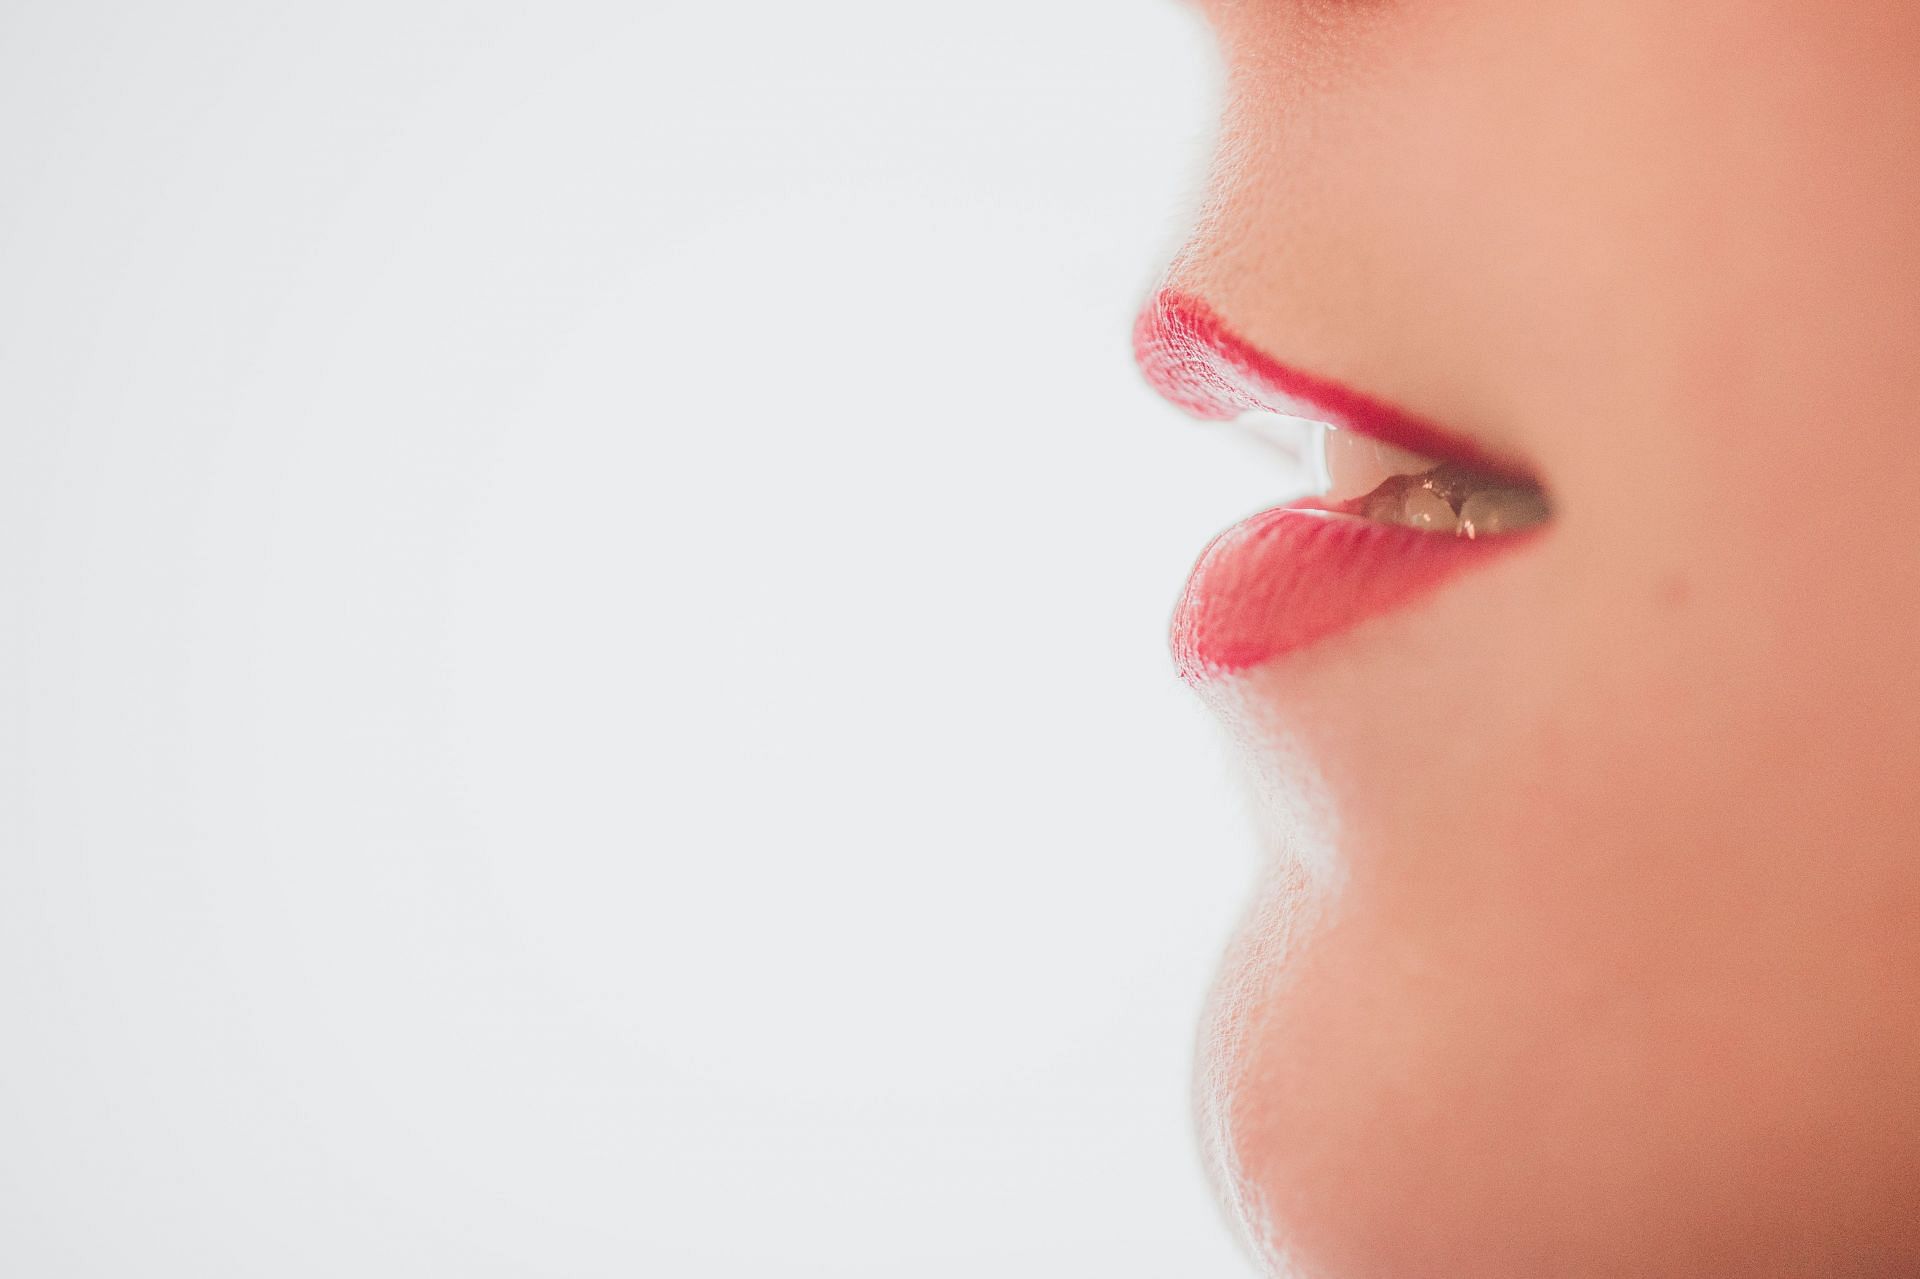 Pursed lip breathing helps in many ways. (Image via Unsplash/ Timothy Dykes)